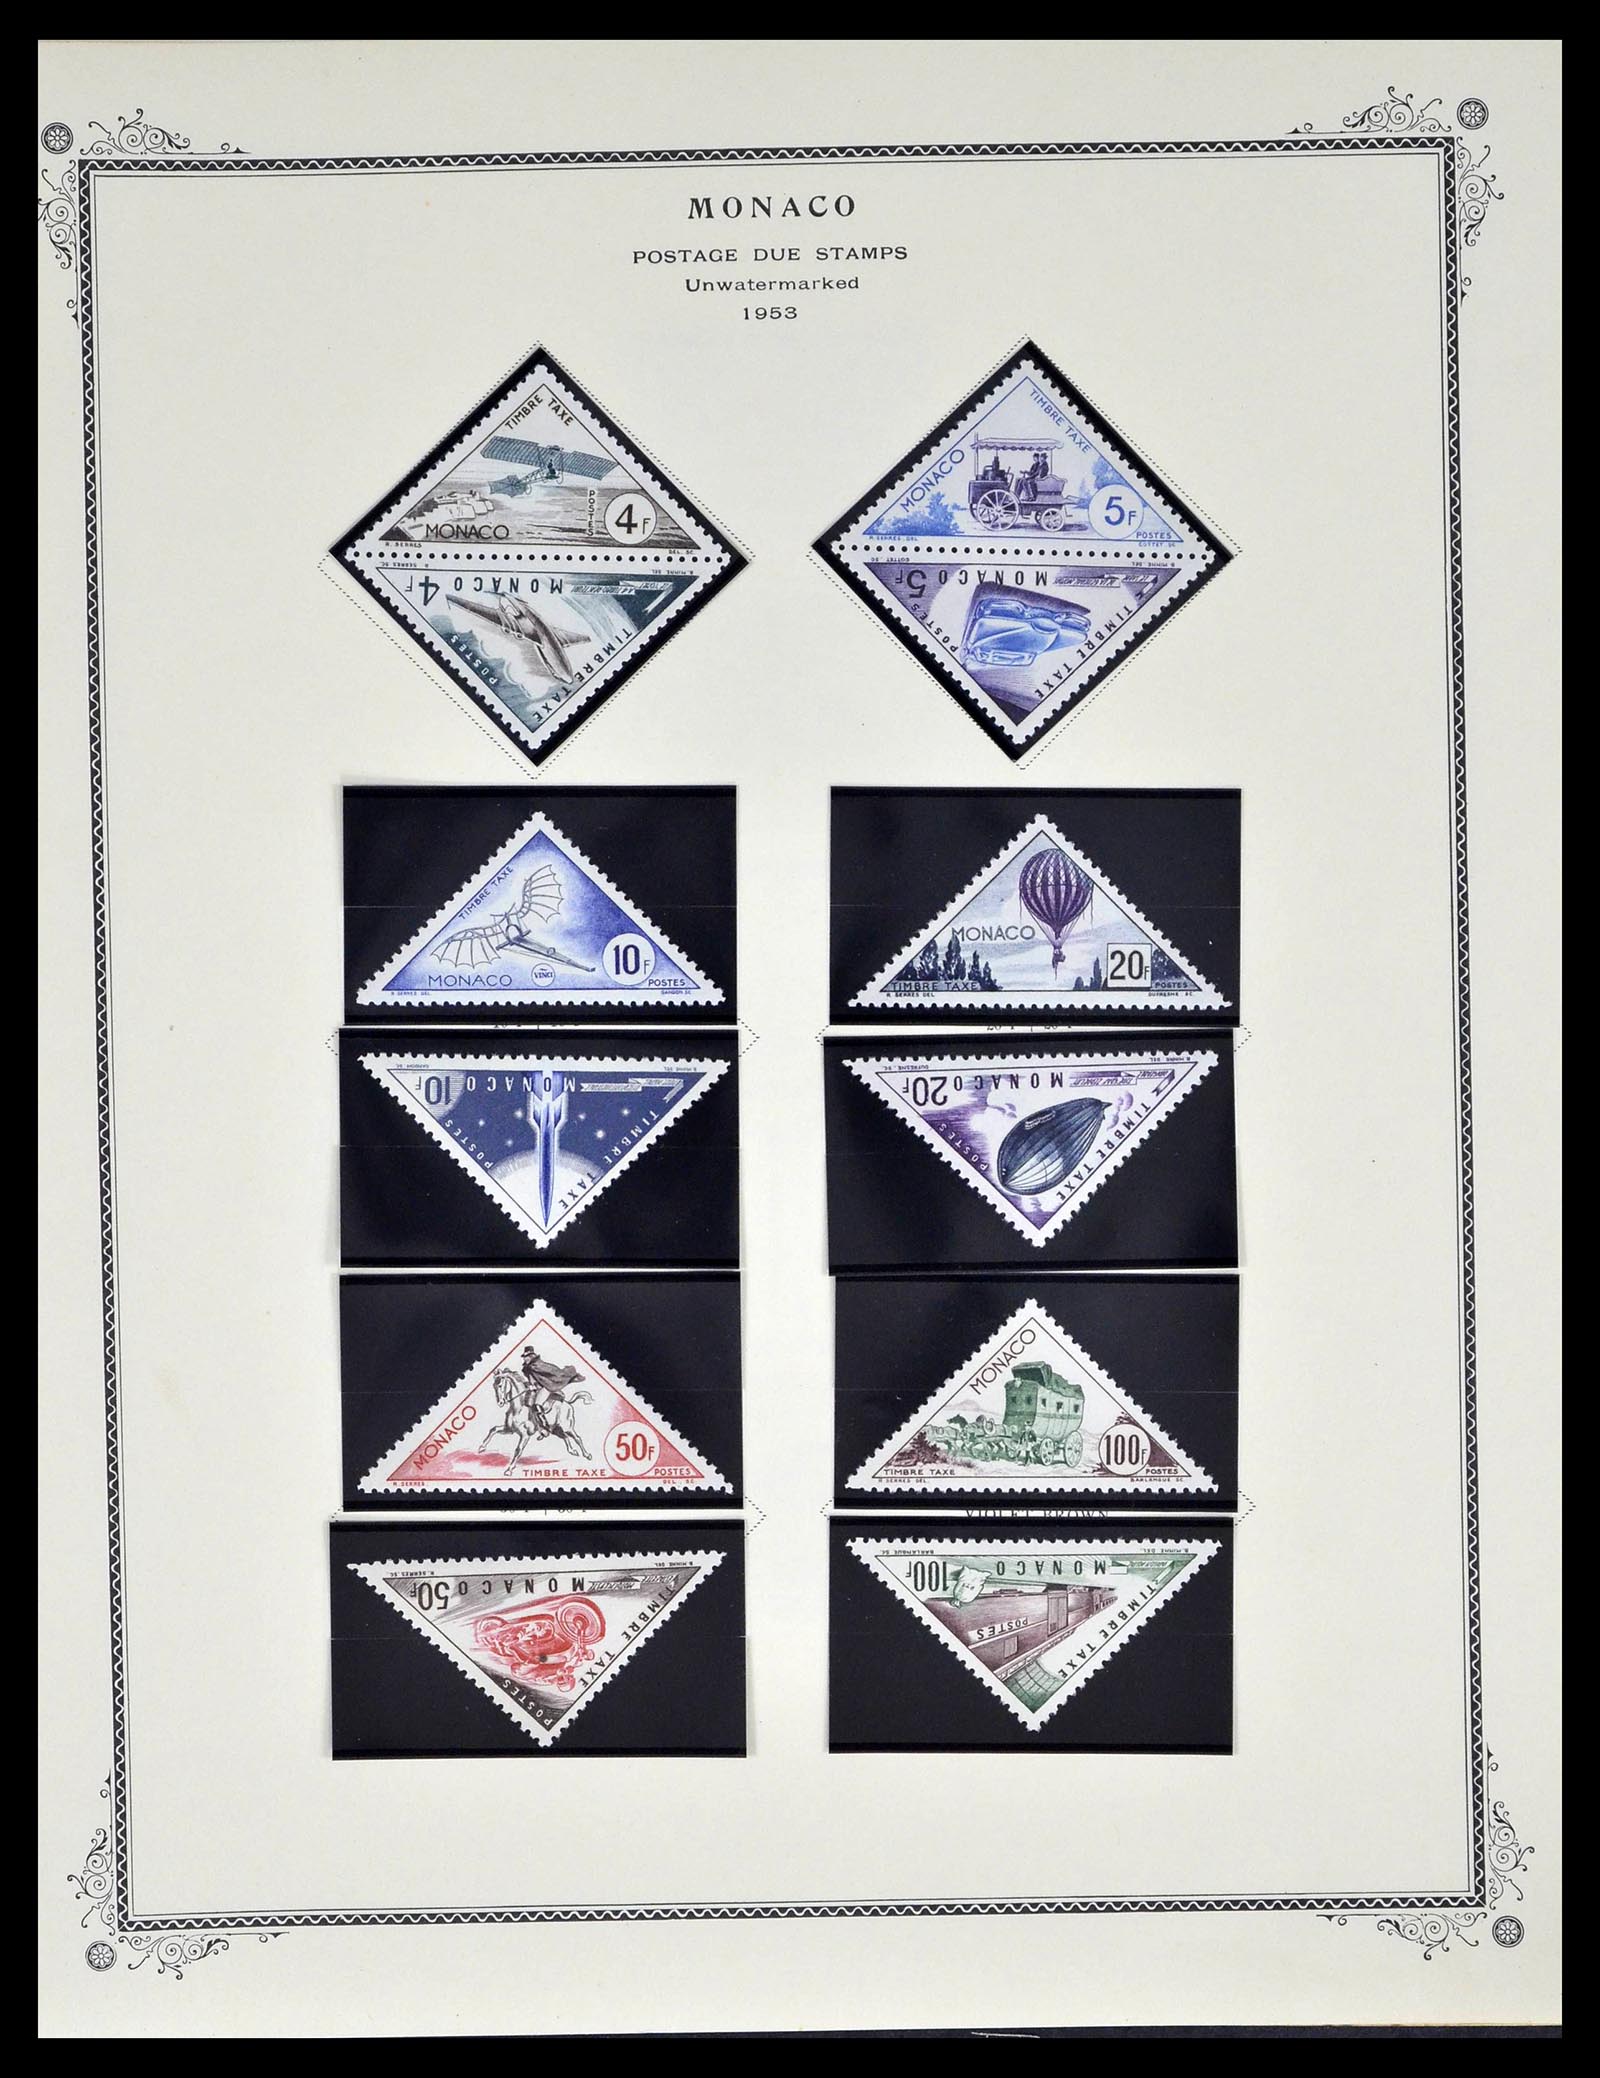 39181 0167 - Stamp collection 39181 Monaco 1885-1980.